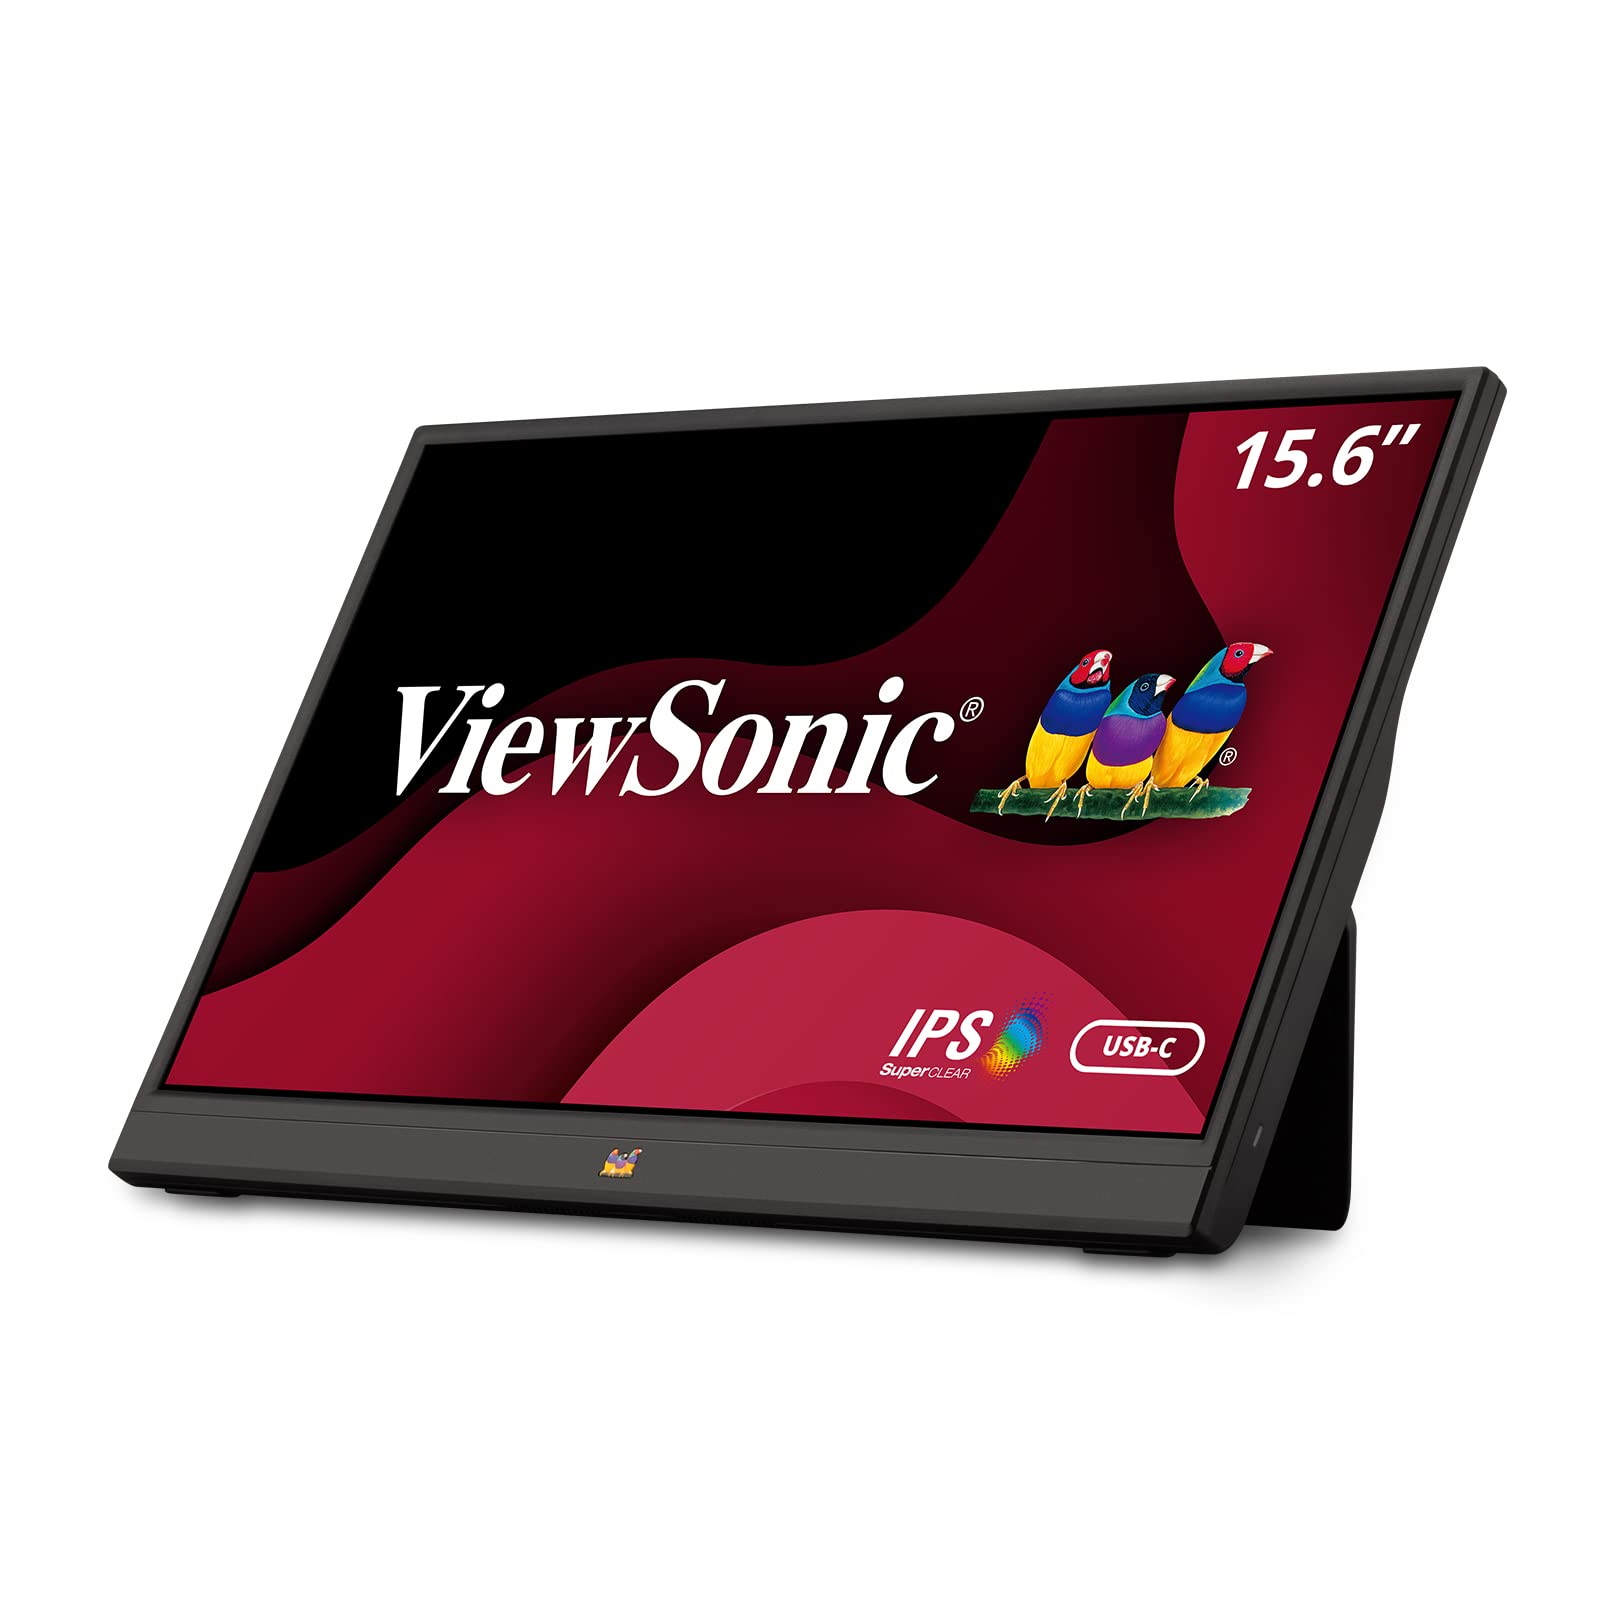 Viewsonic VA1655 15.6 英寸 1080p 便携式 IPS 显示器，带内置支架、移动人体工程学、USB C、迷你 HDMI 和适用于家庭和办公室的保护套，黑色